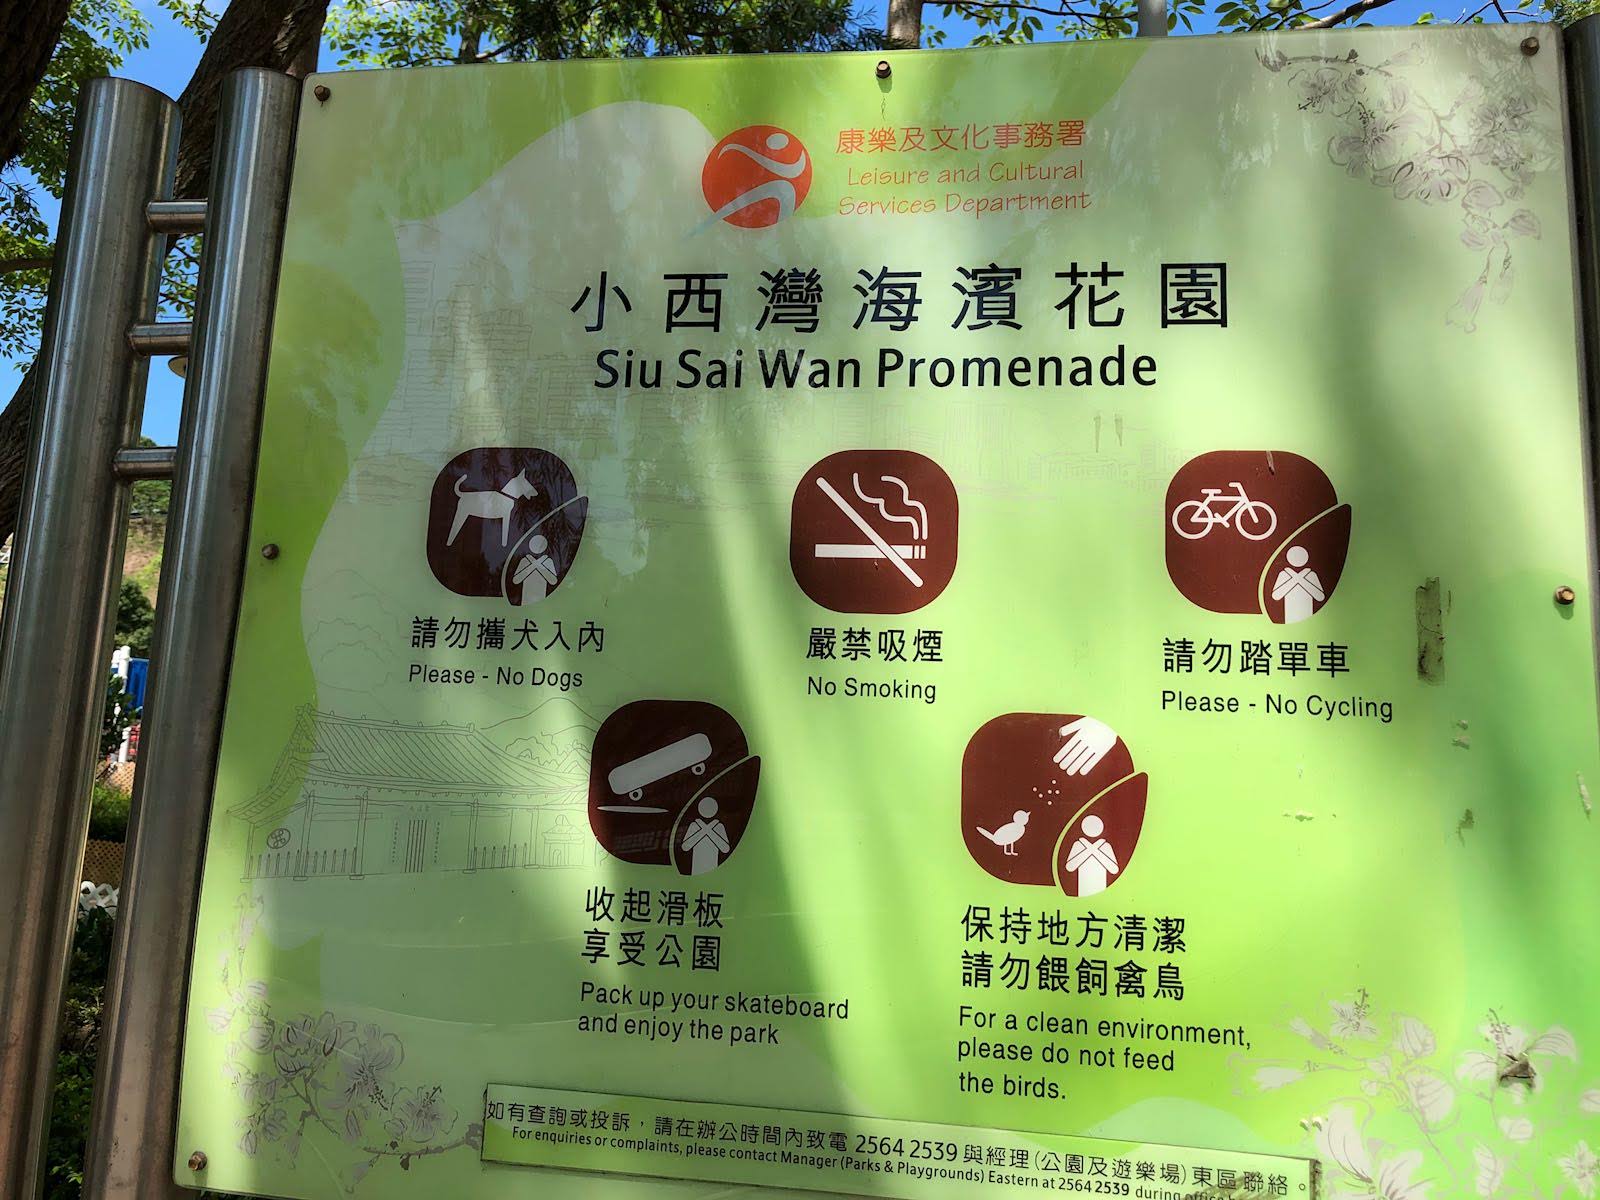 Sui Sai Wan Promenade's regulations